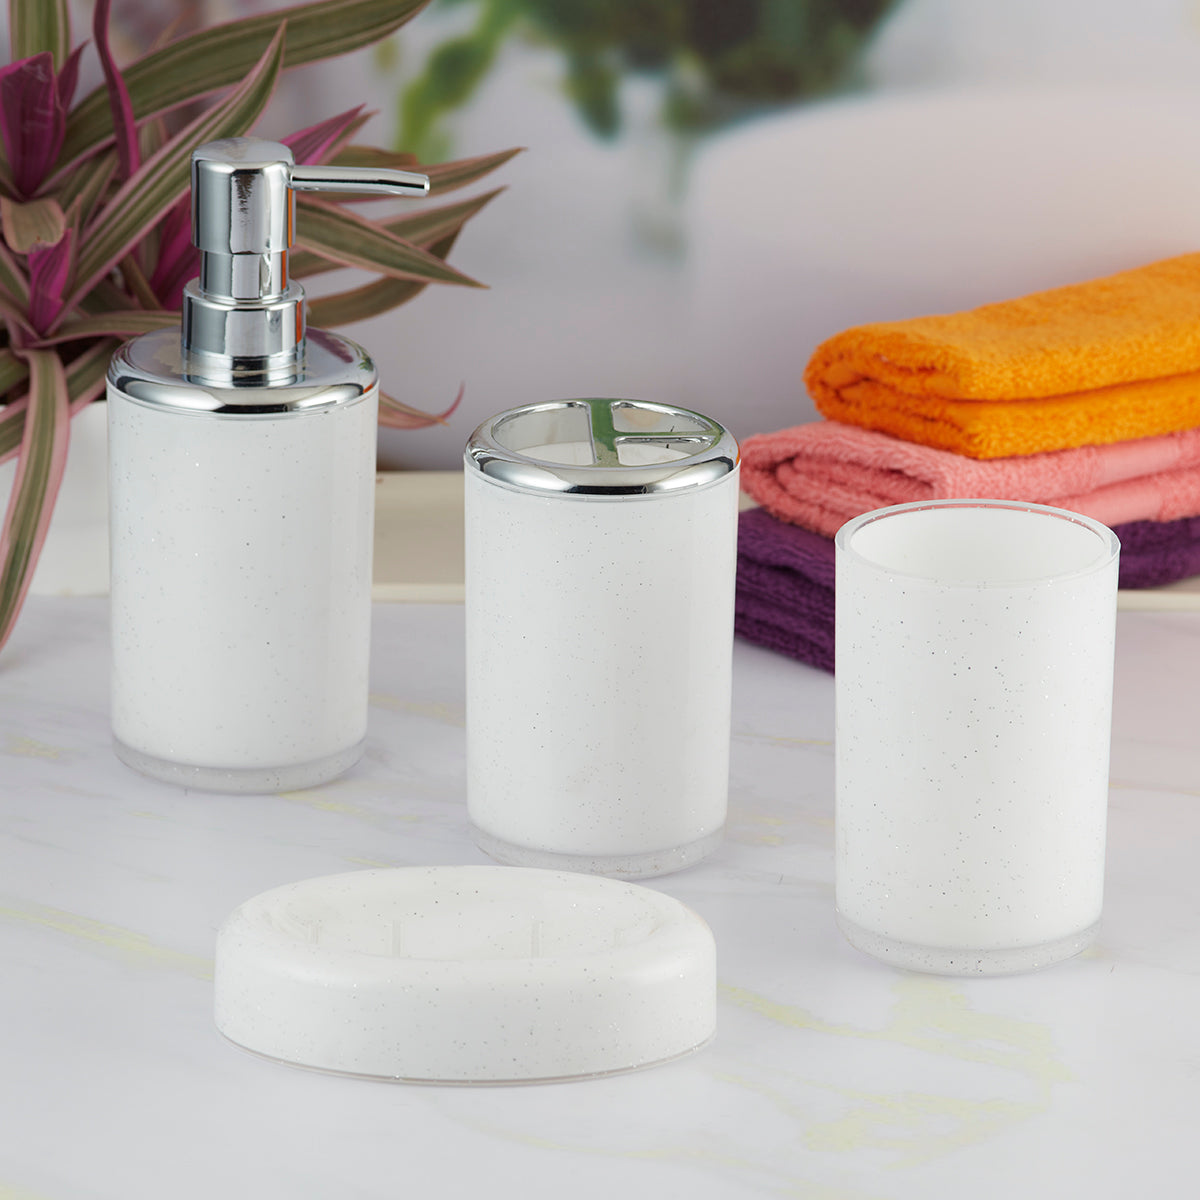 Acrylic Bathroom Accessories Set of 4 Bath Set with Soap Dispenser (10049)